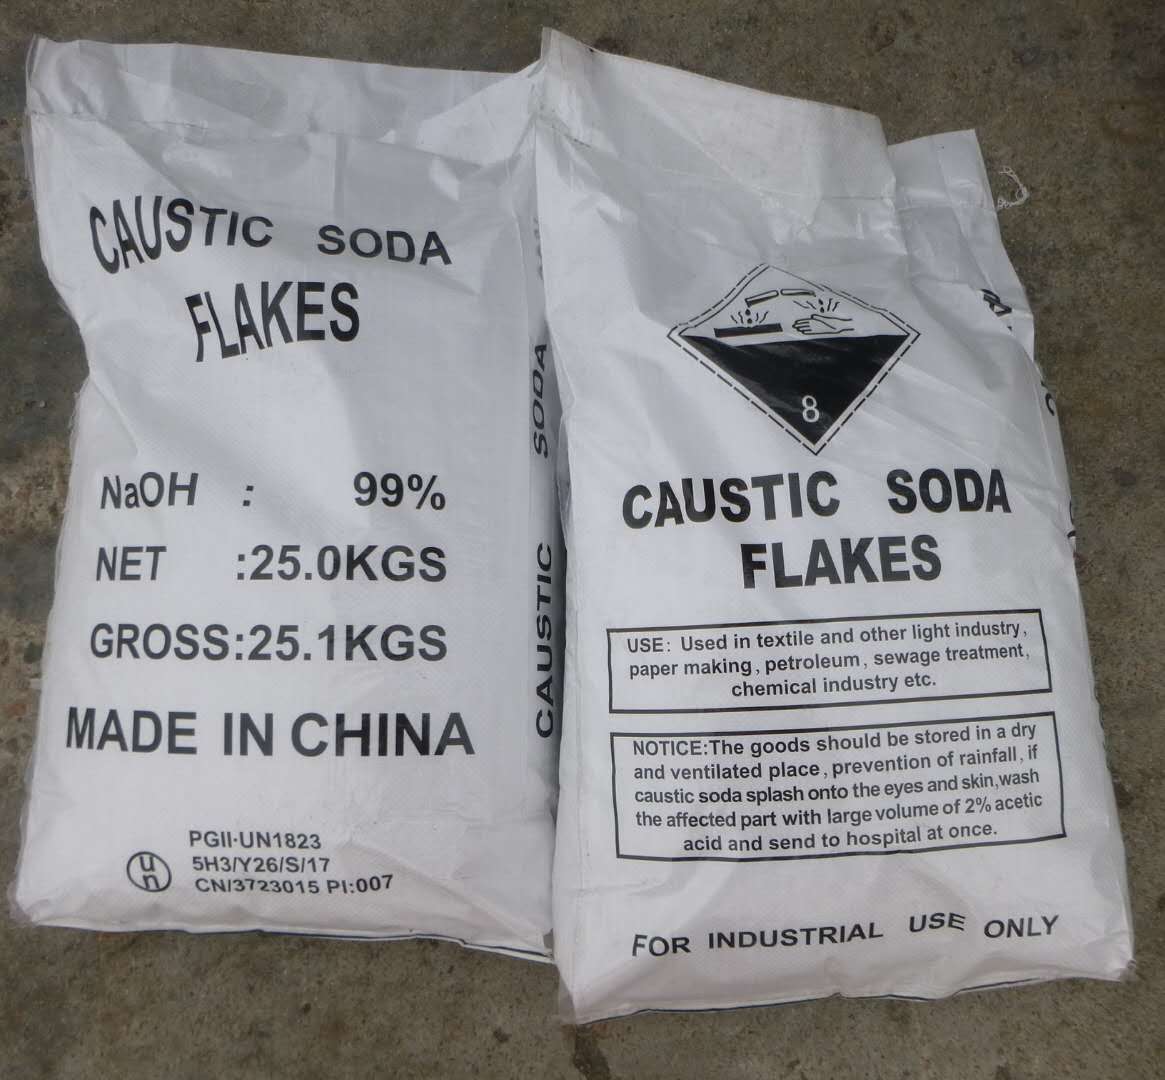 Caustic soda flakes